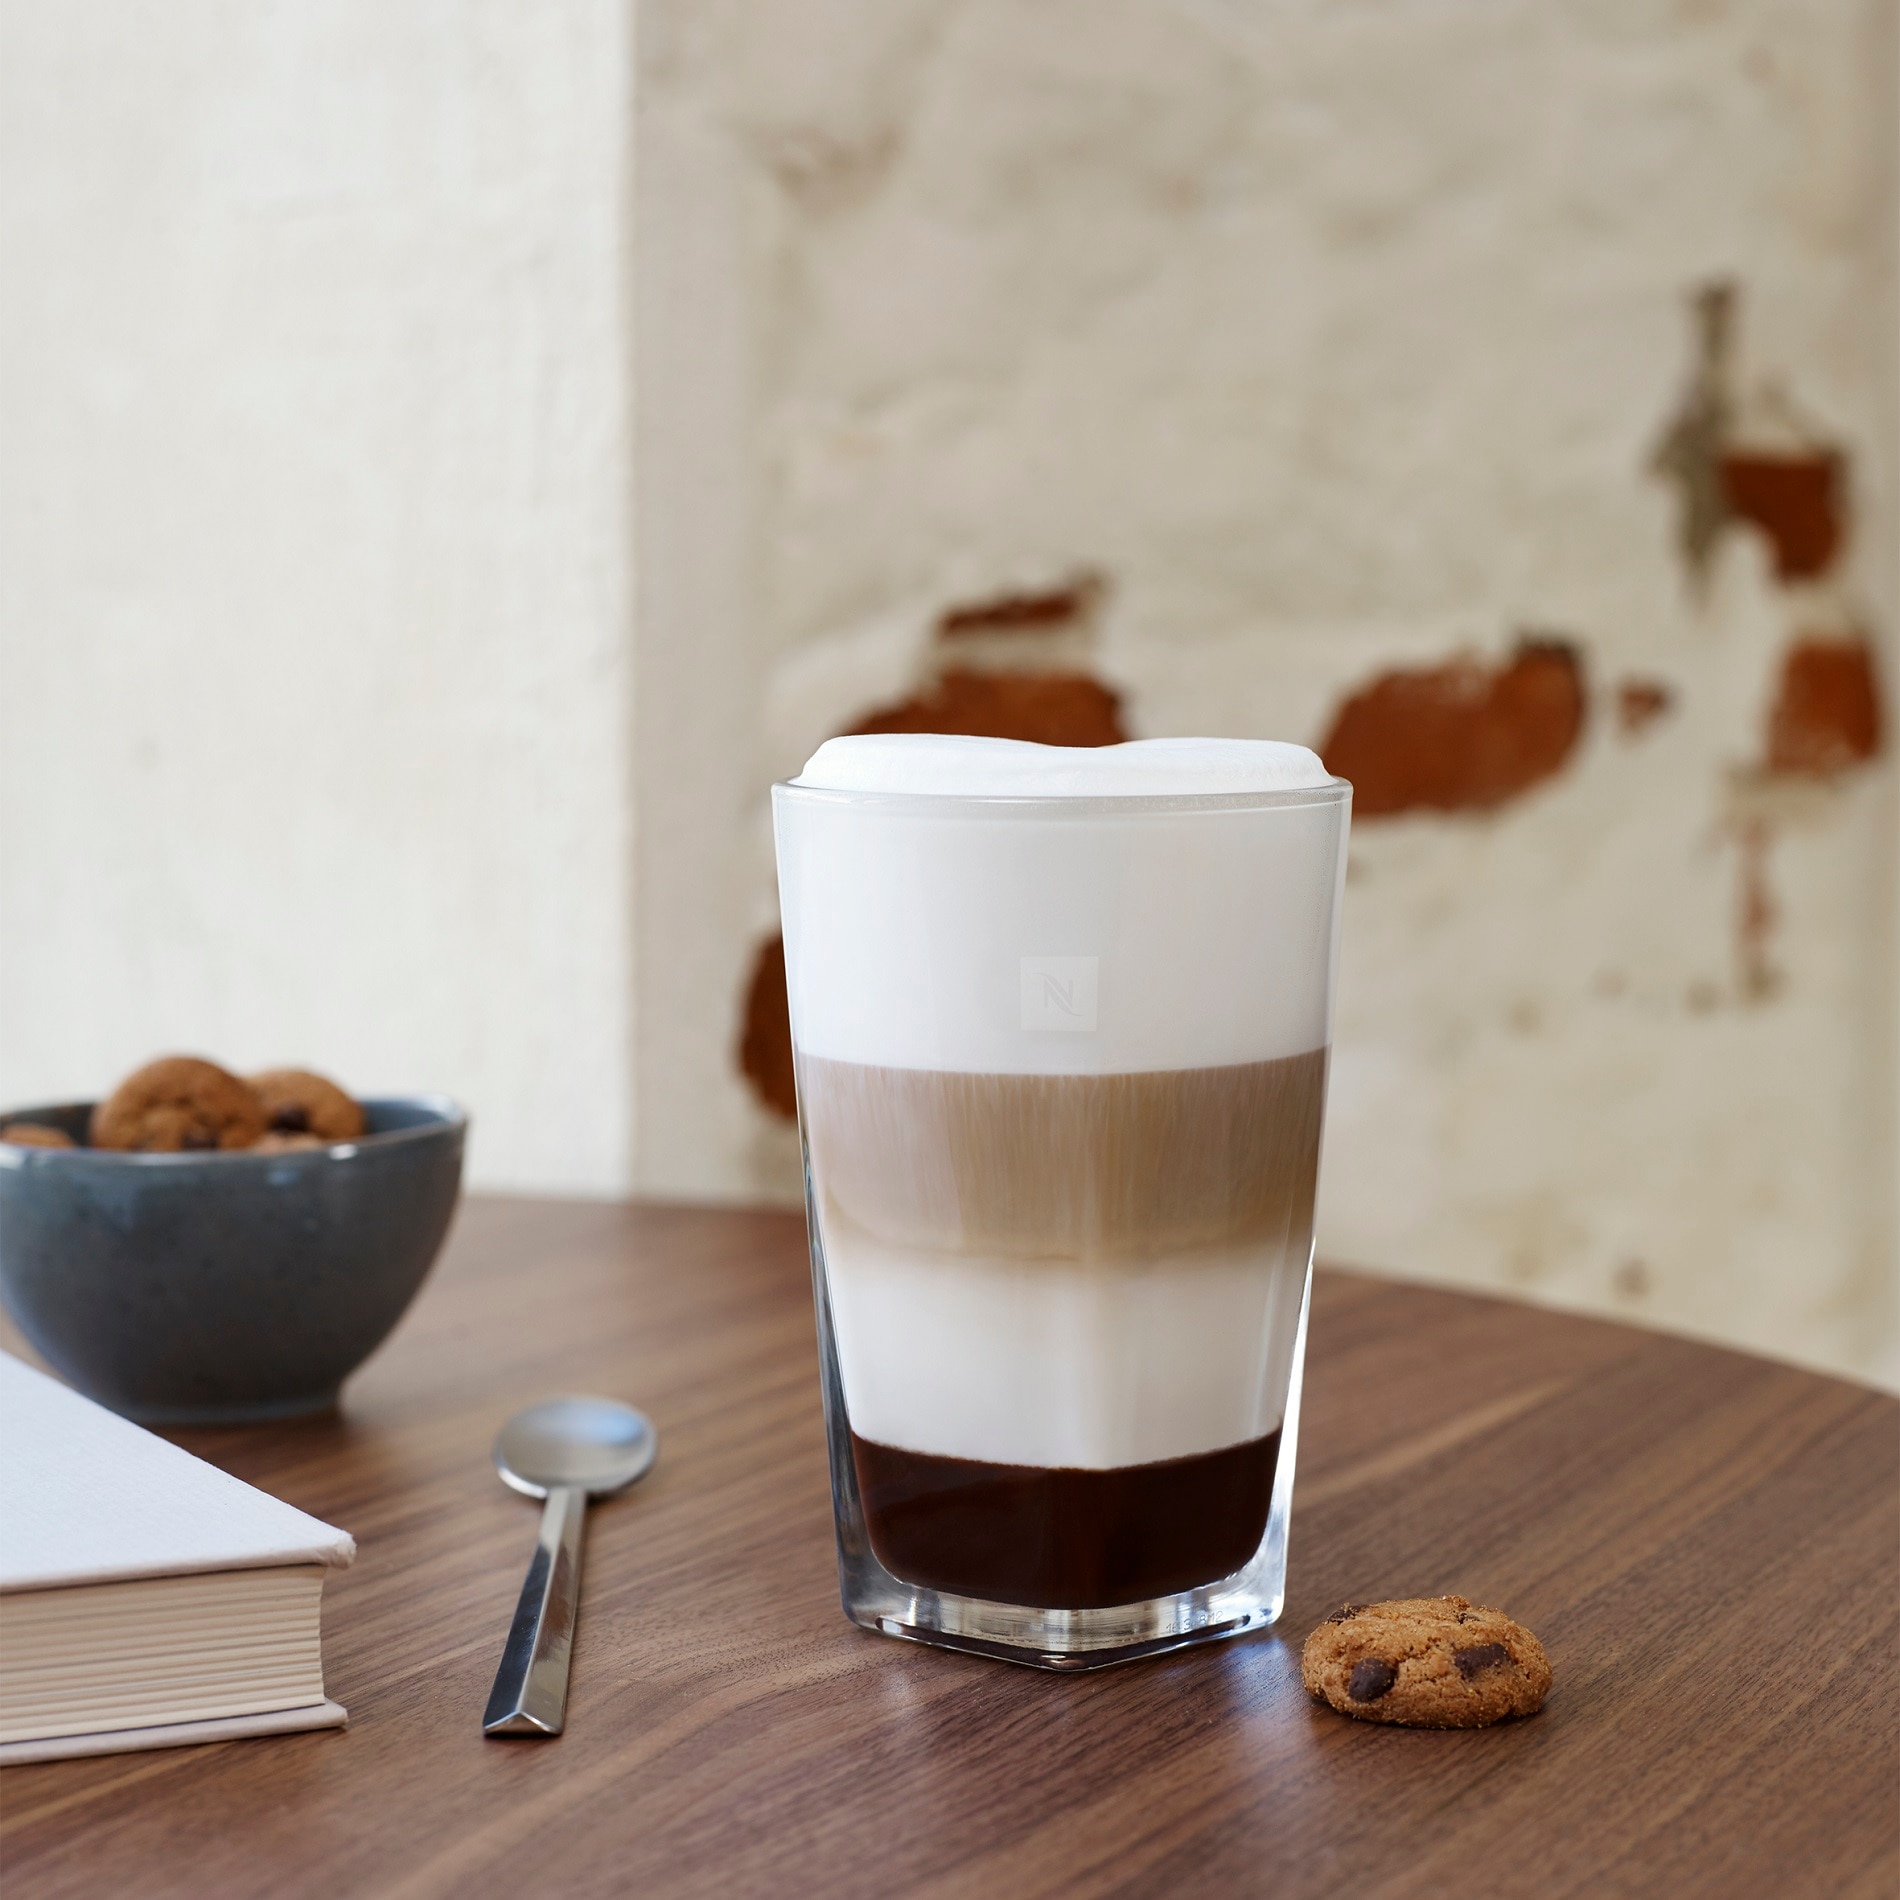 Brandweerman staan Harmonisch Caffé Latte Chocolate Cookie - Nespresso Recipes